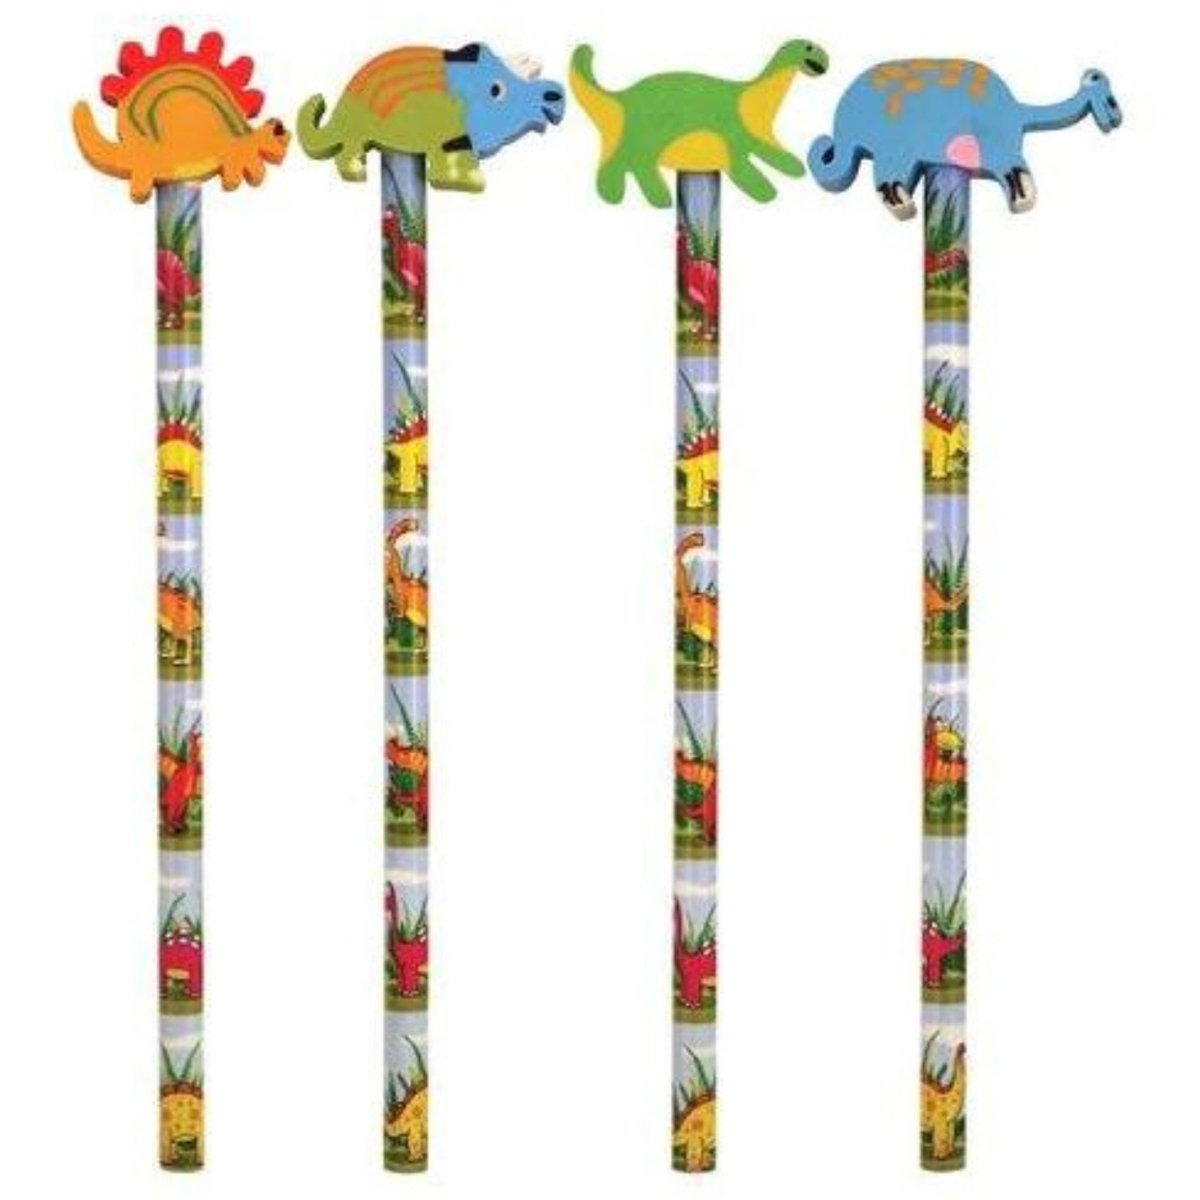 Dinosaur Pencil With Eraser - Kids Party Craft